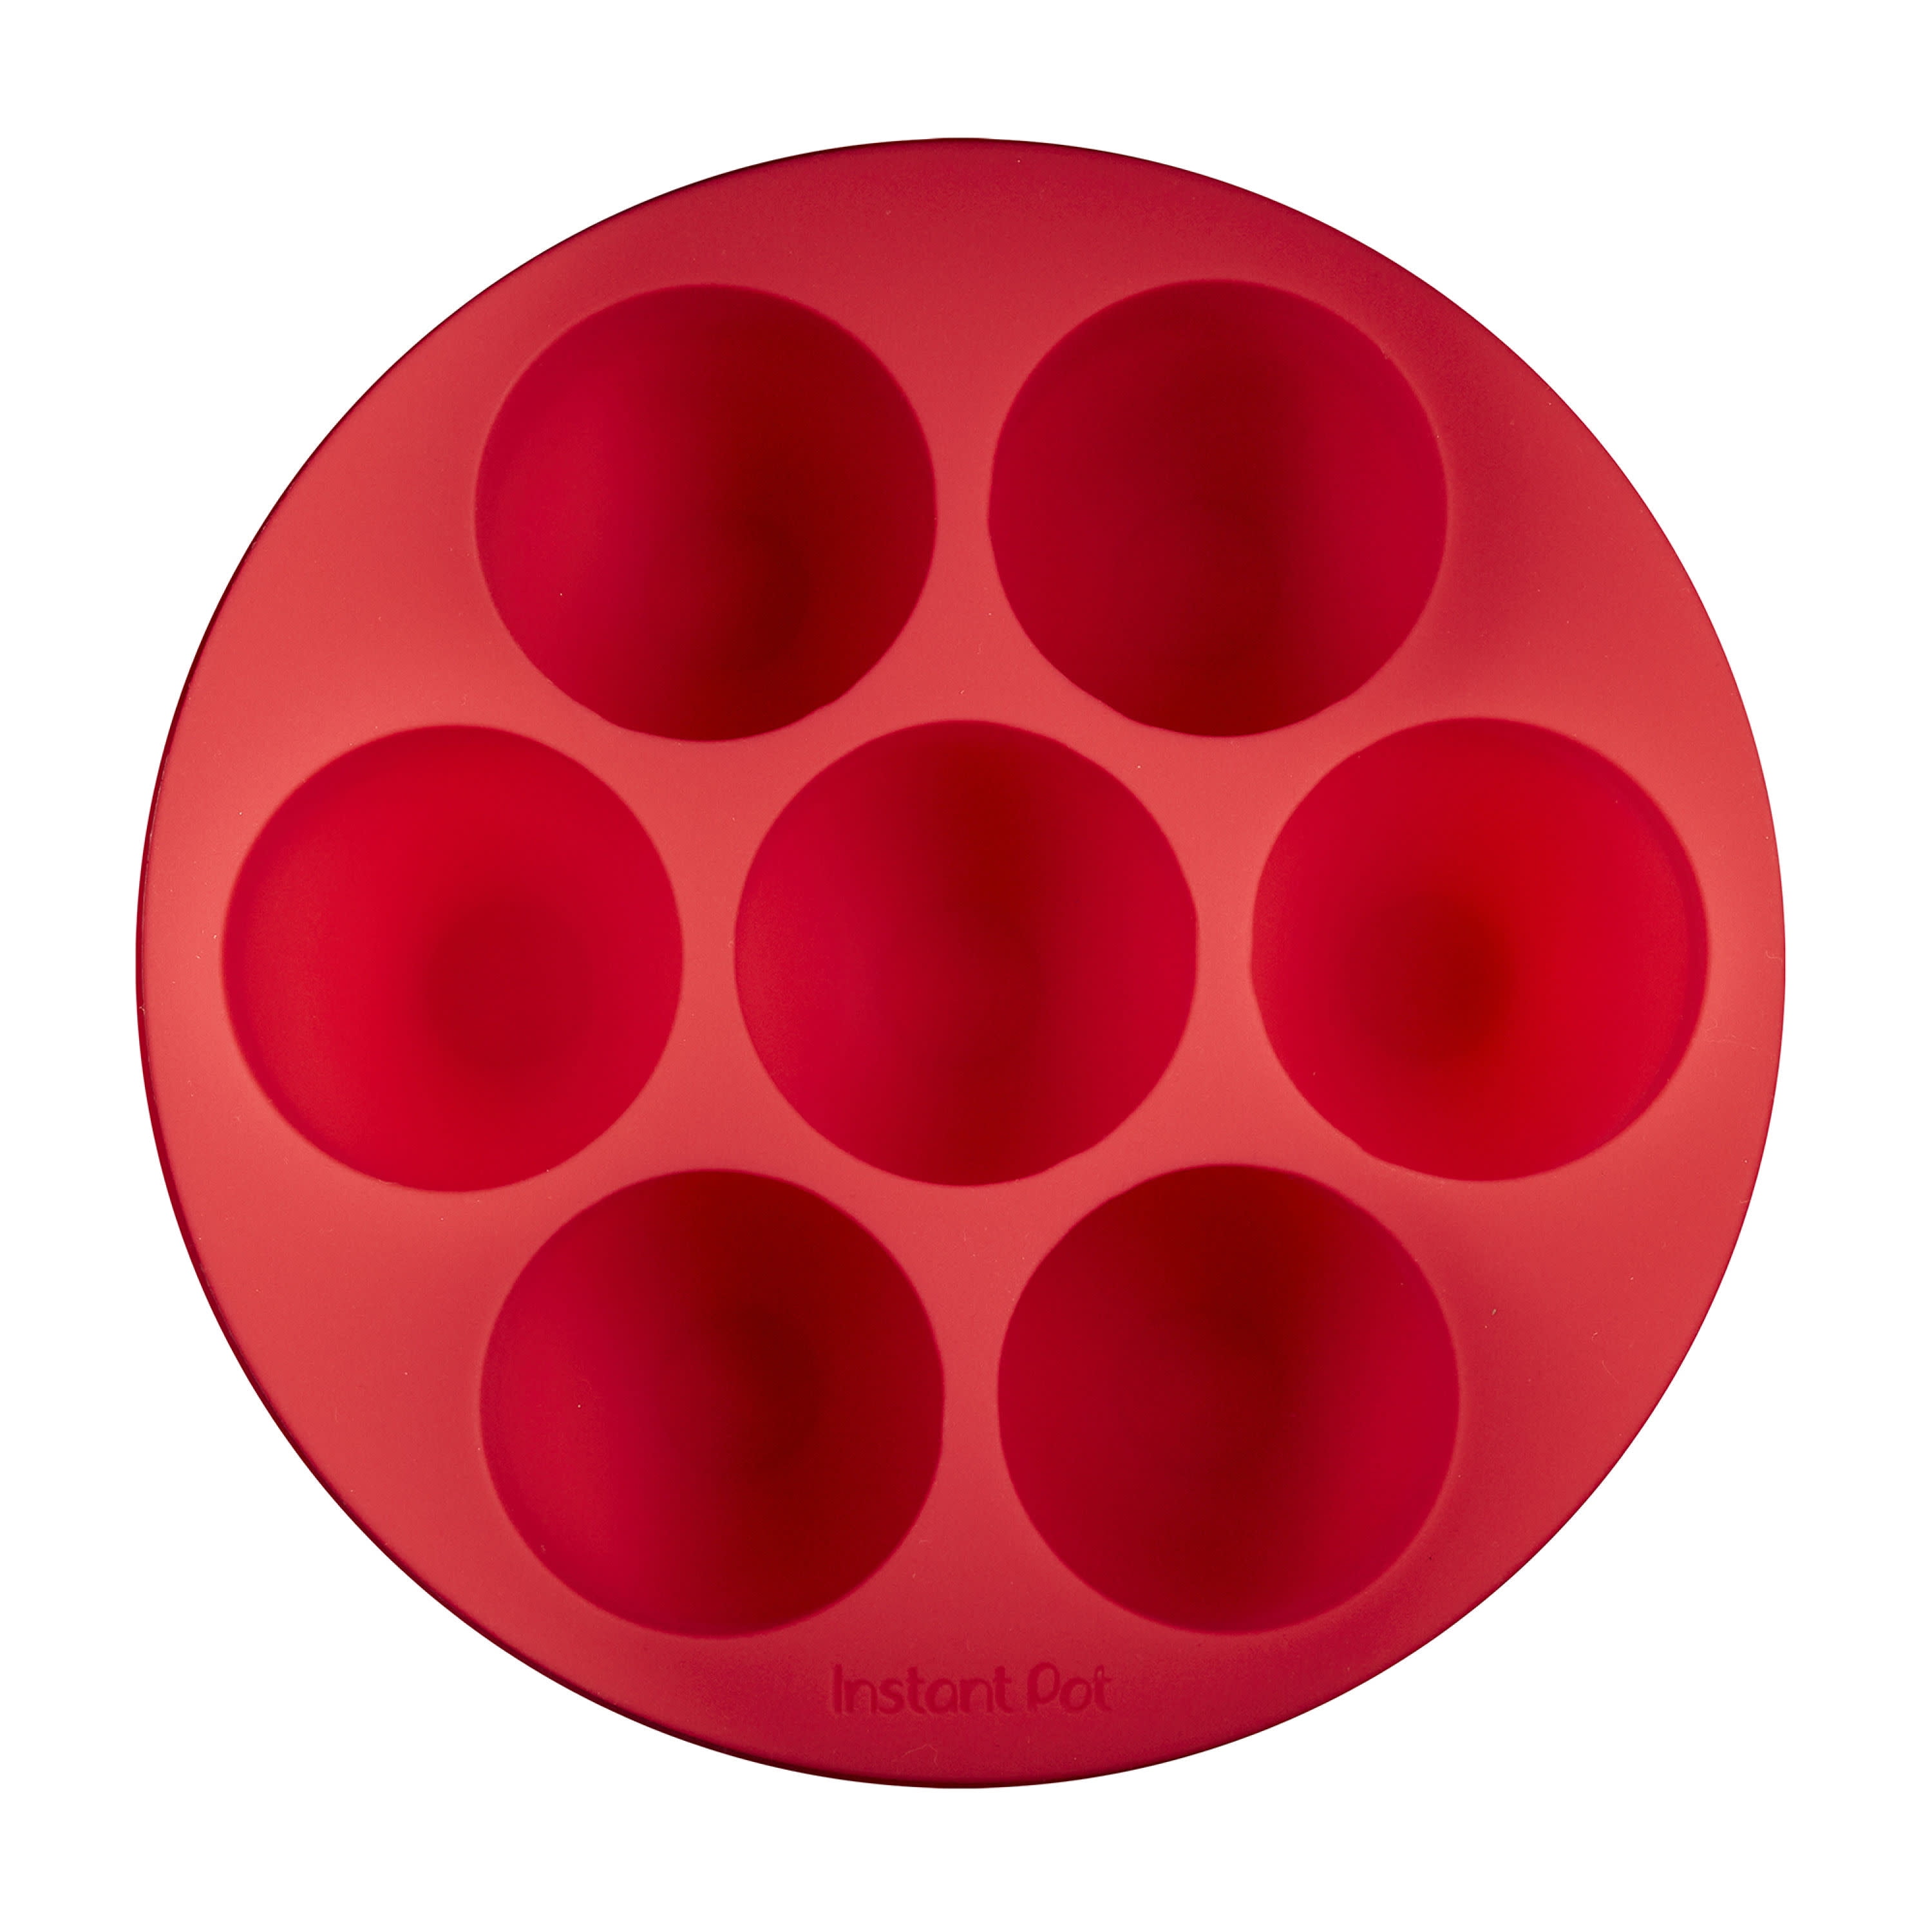 Instant Pot® Silicone Egg Bite Mold - Red, 1 ct - Kroger